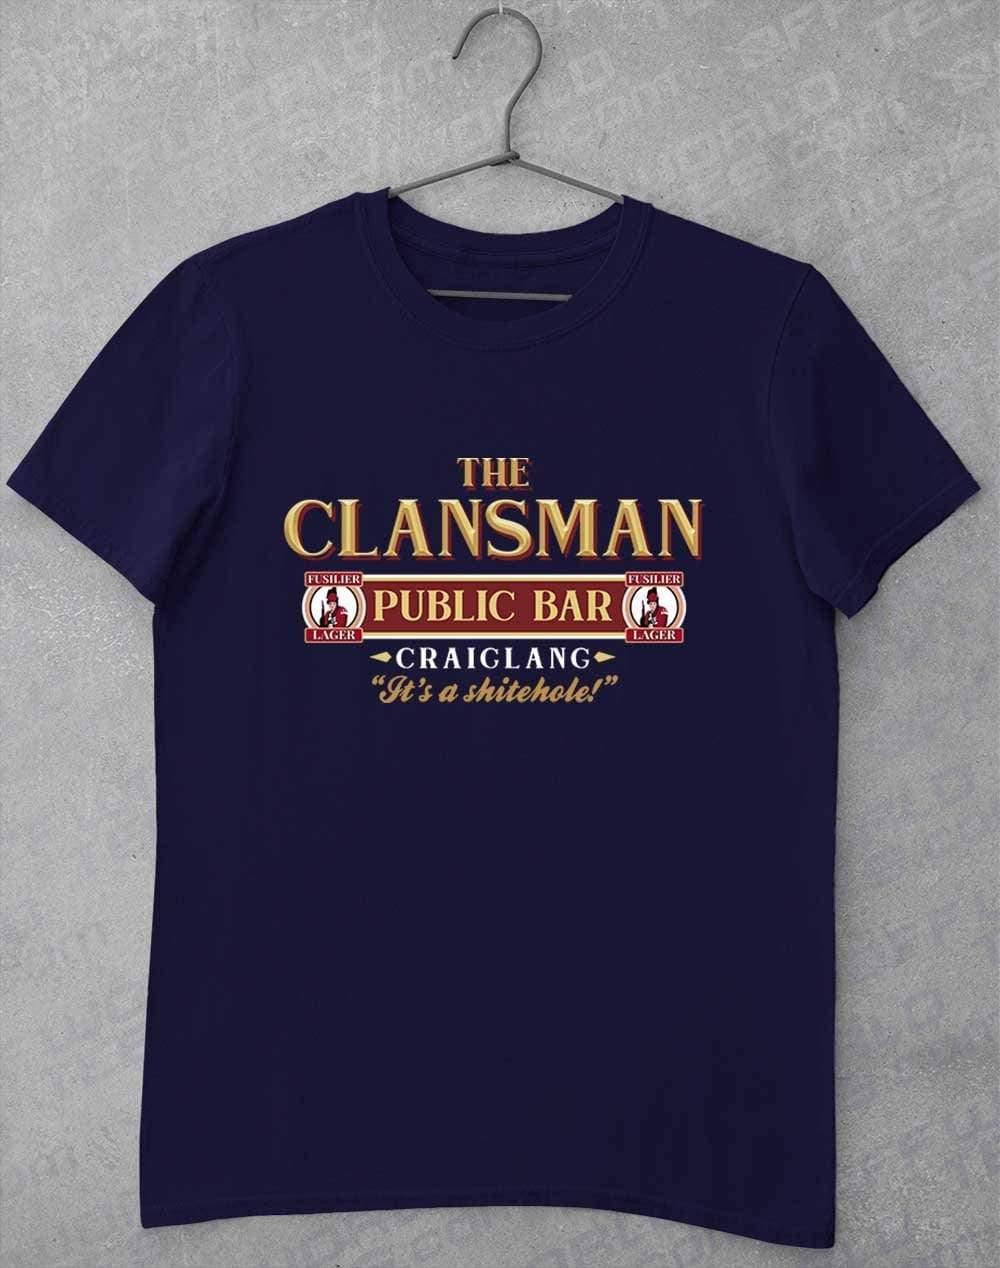 The Clansman Craiglang T-Shirt S / Navy  - Off World Tees